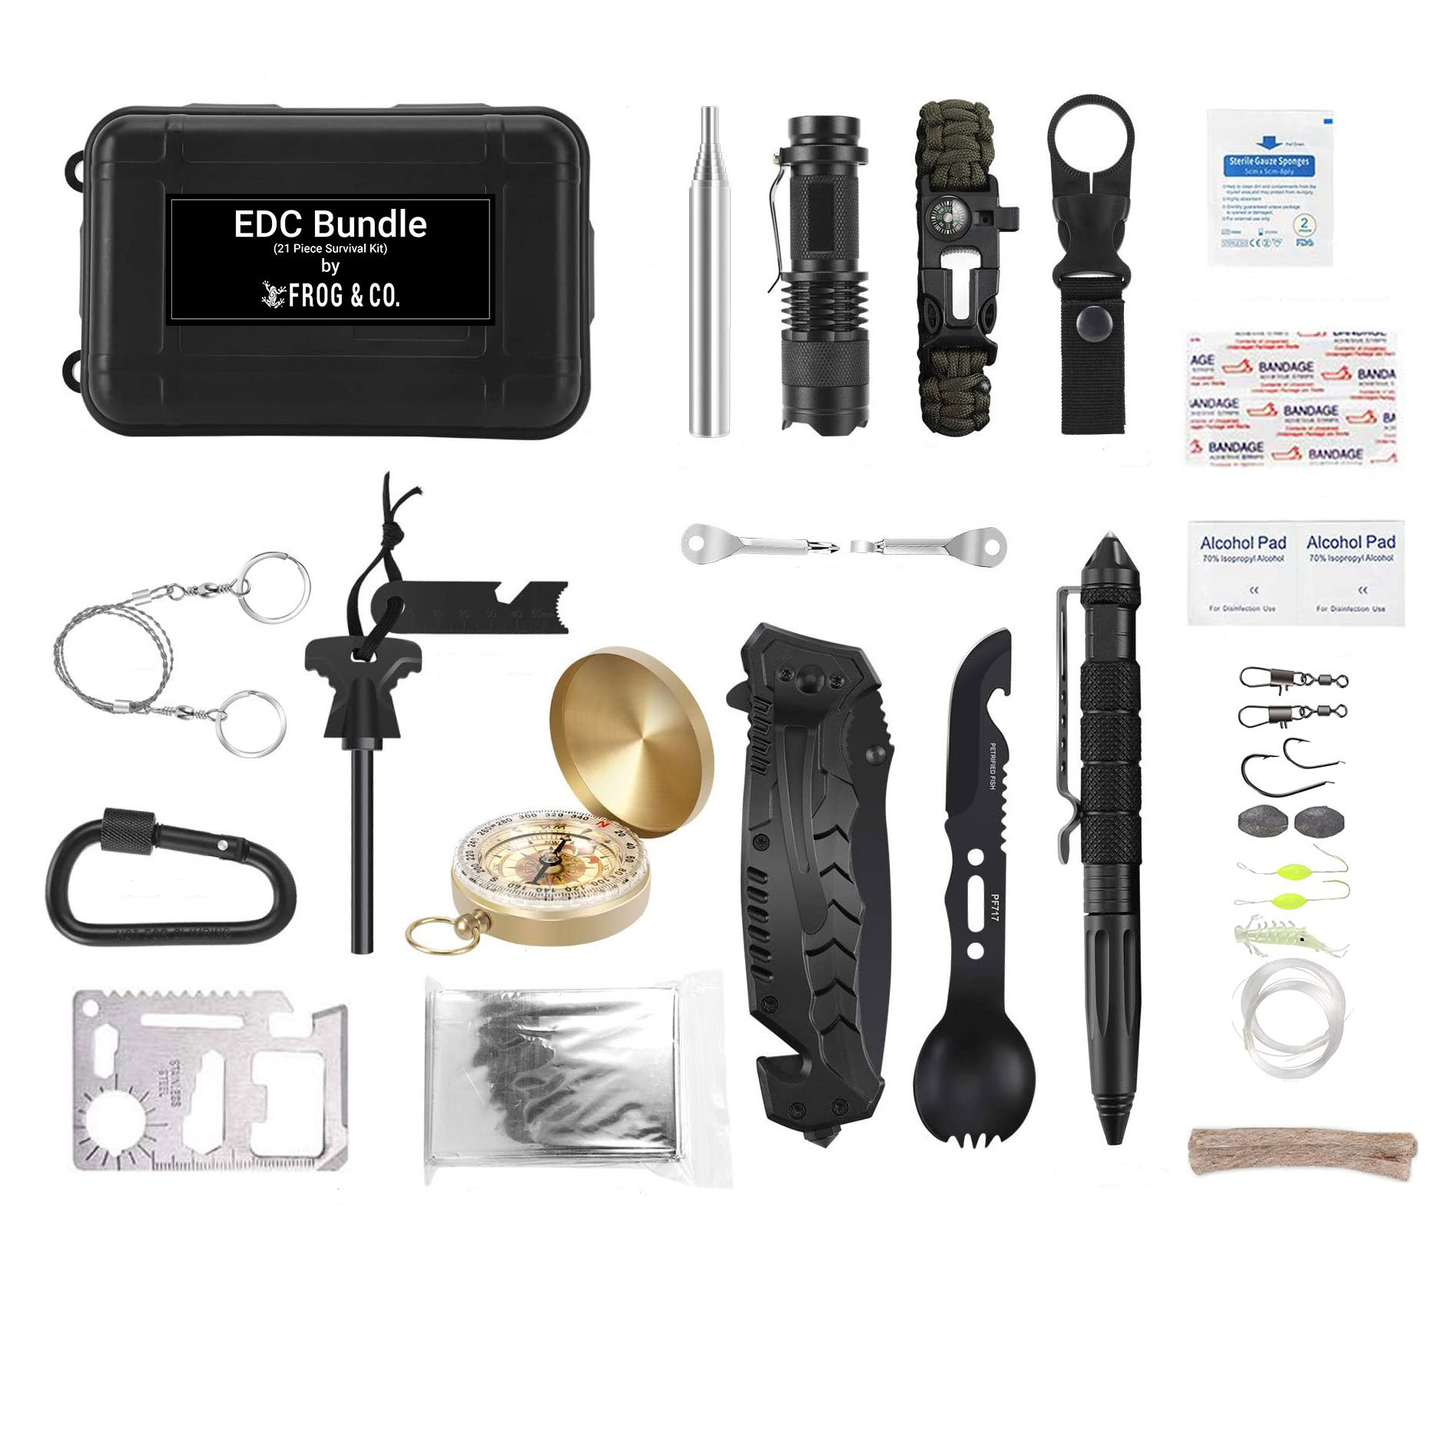 Car Emergency Survival Kit